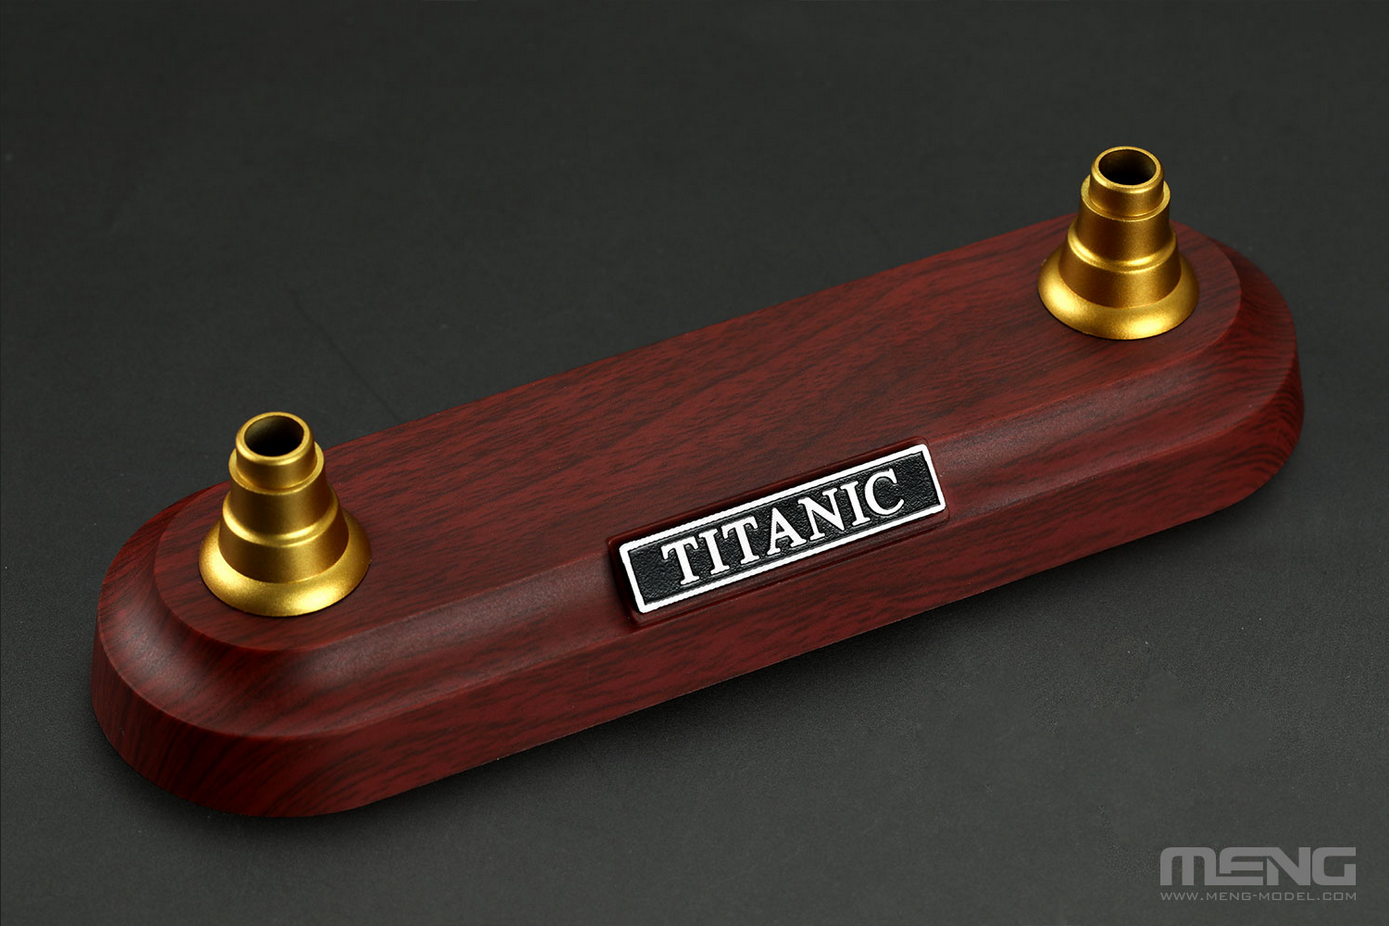 R.M.S. Titanic - MENG 1/700